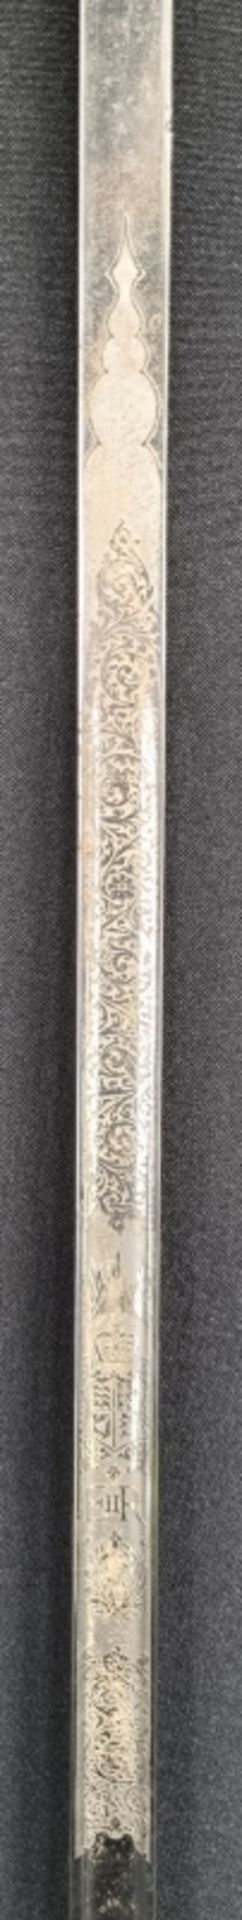 Wilkinson Sword Ltd. Ceremonial Sword - serial number 84032 - Image 5 of 11